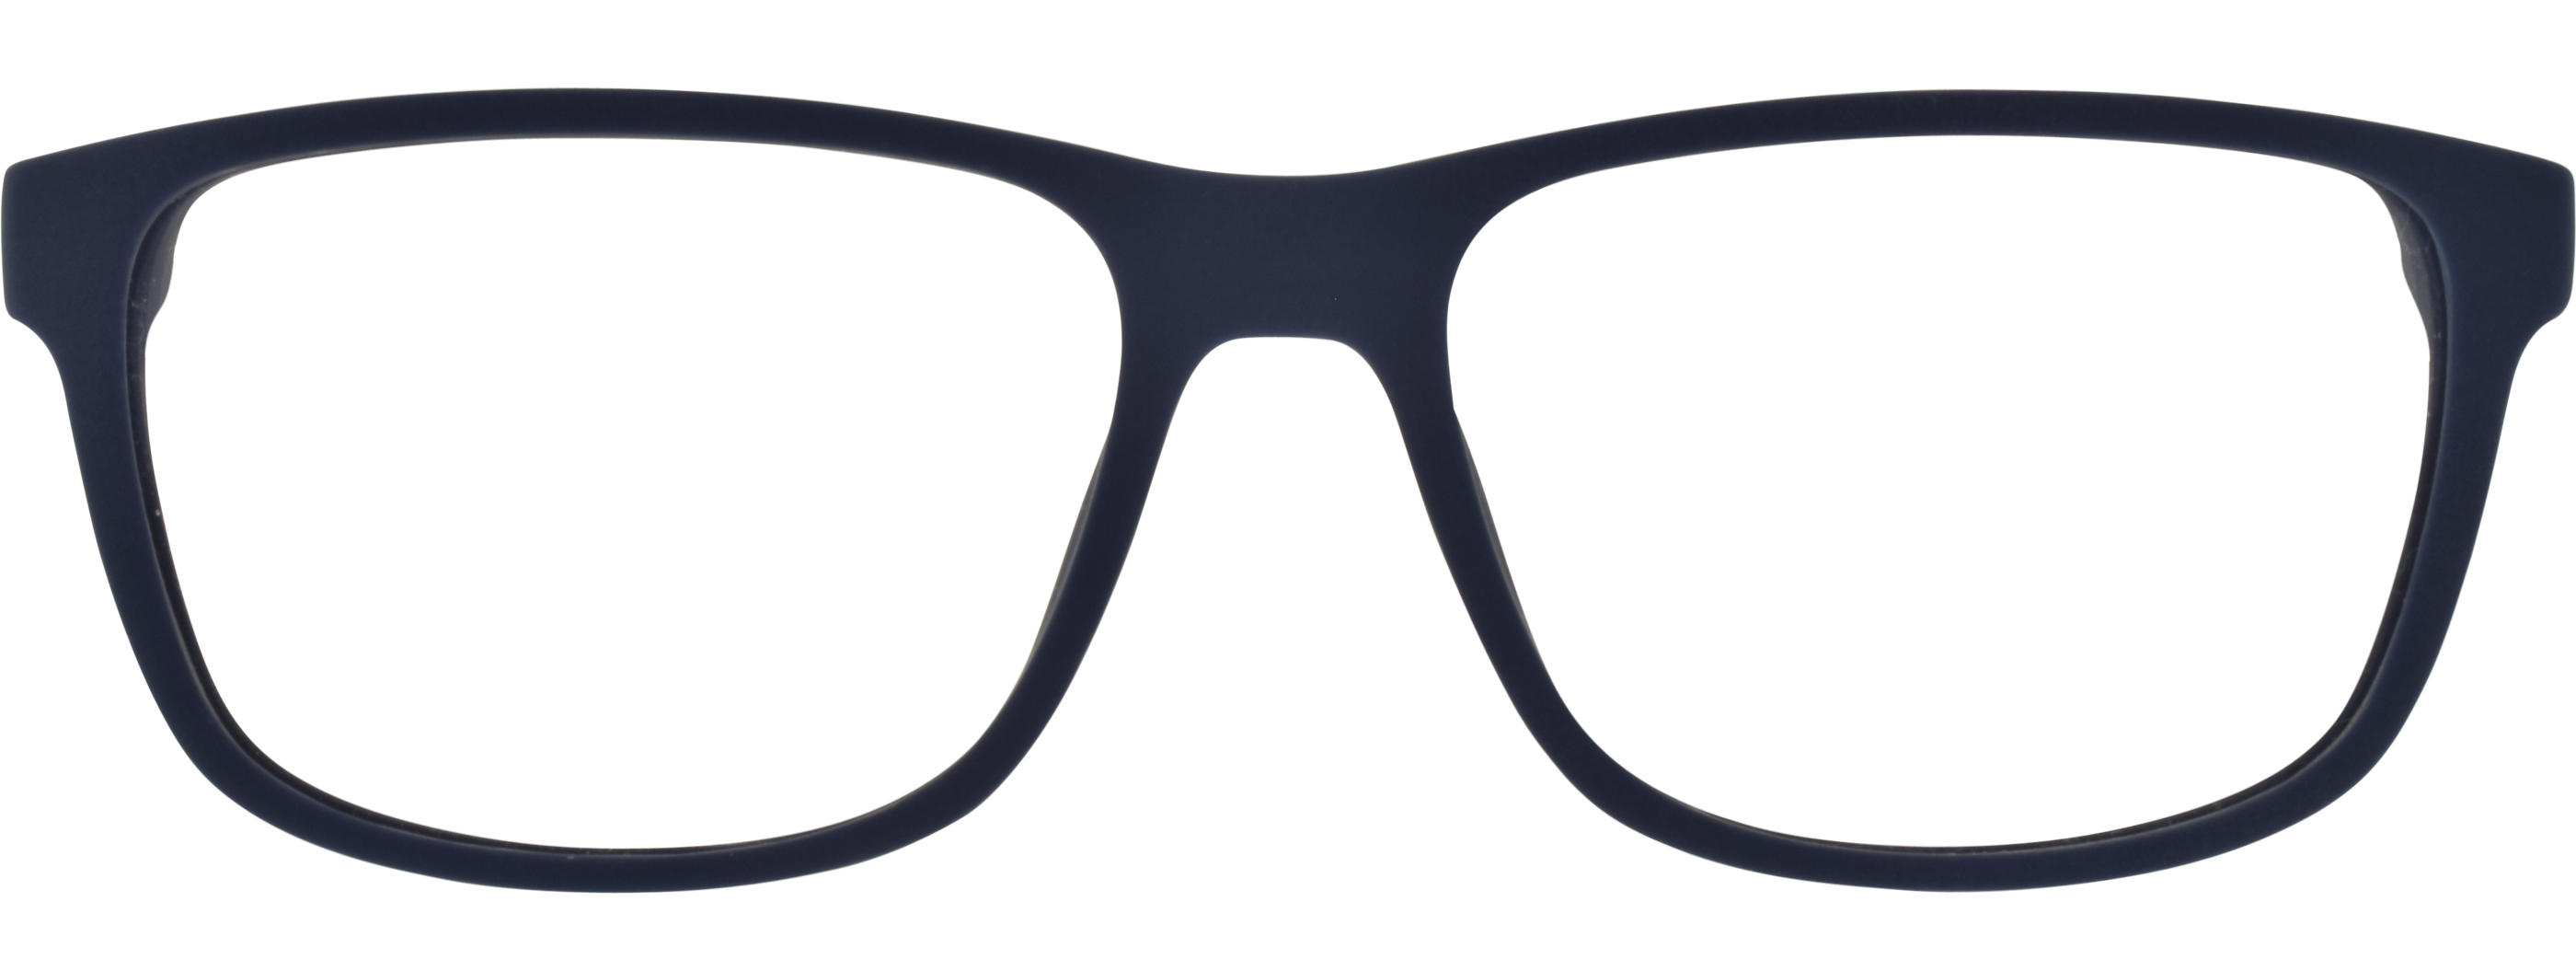 Lacoste 2866 - blauwe herenbril | Hans